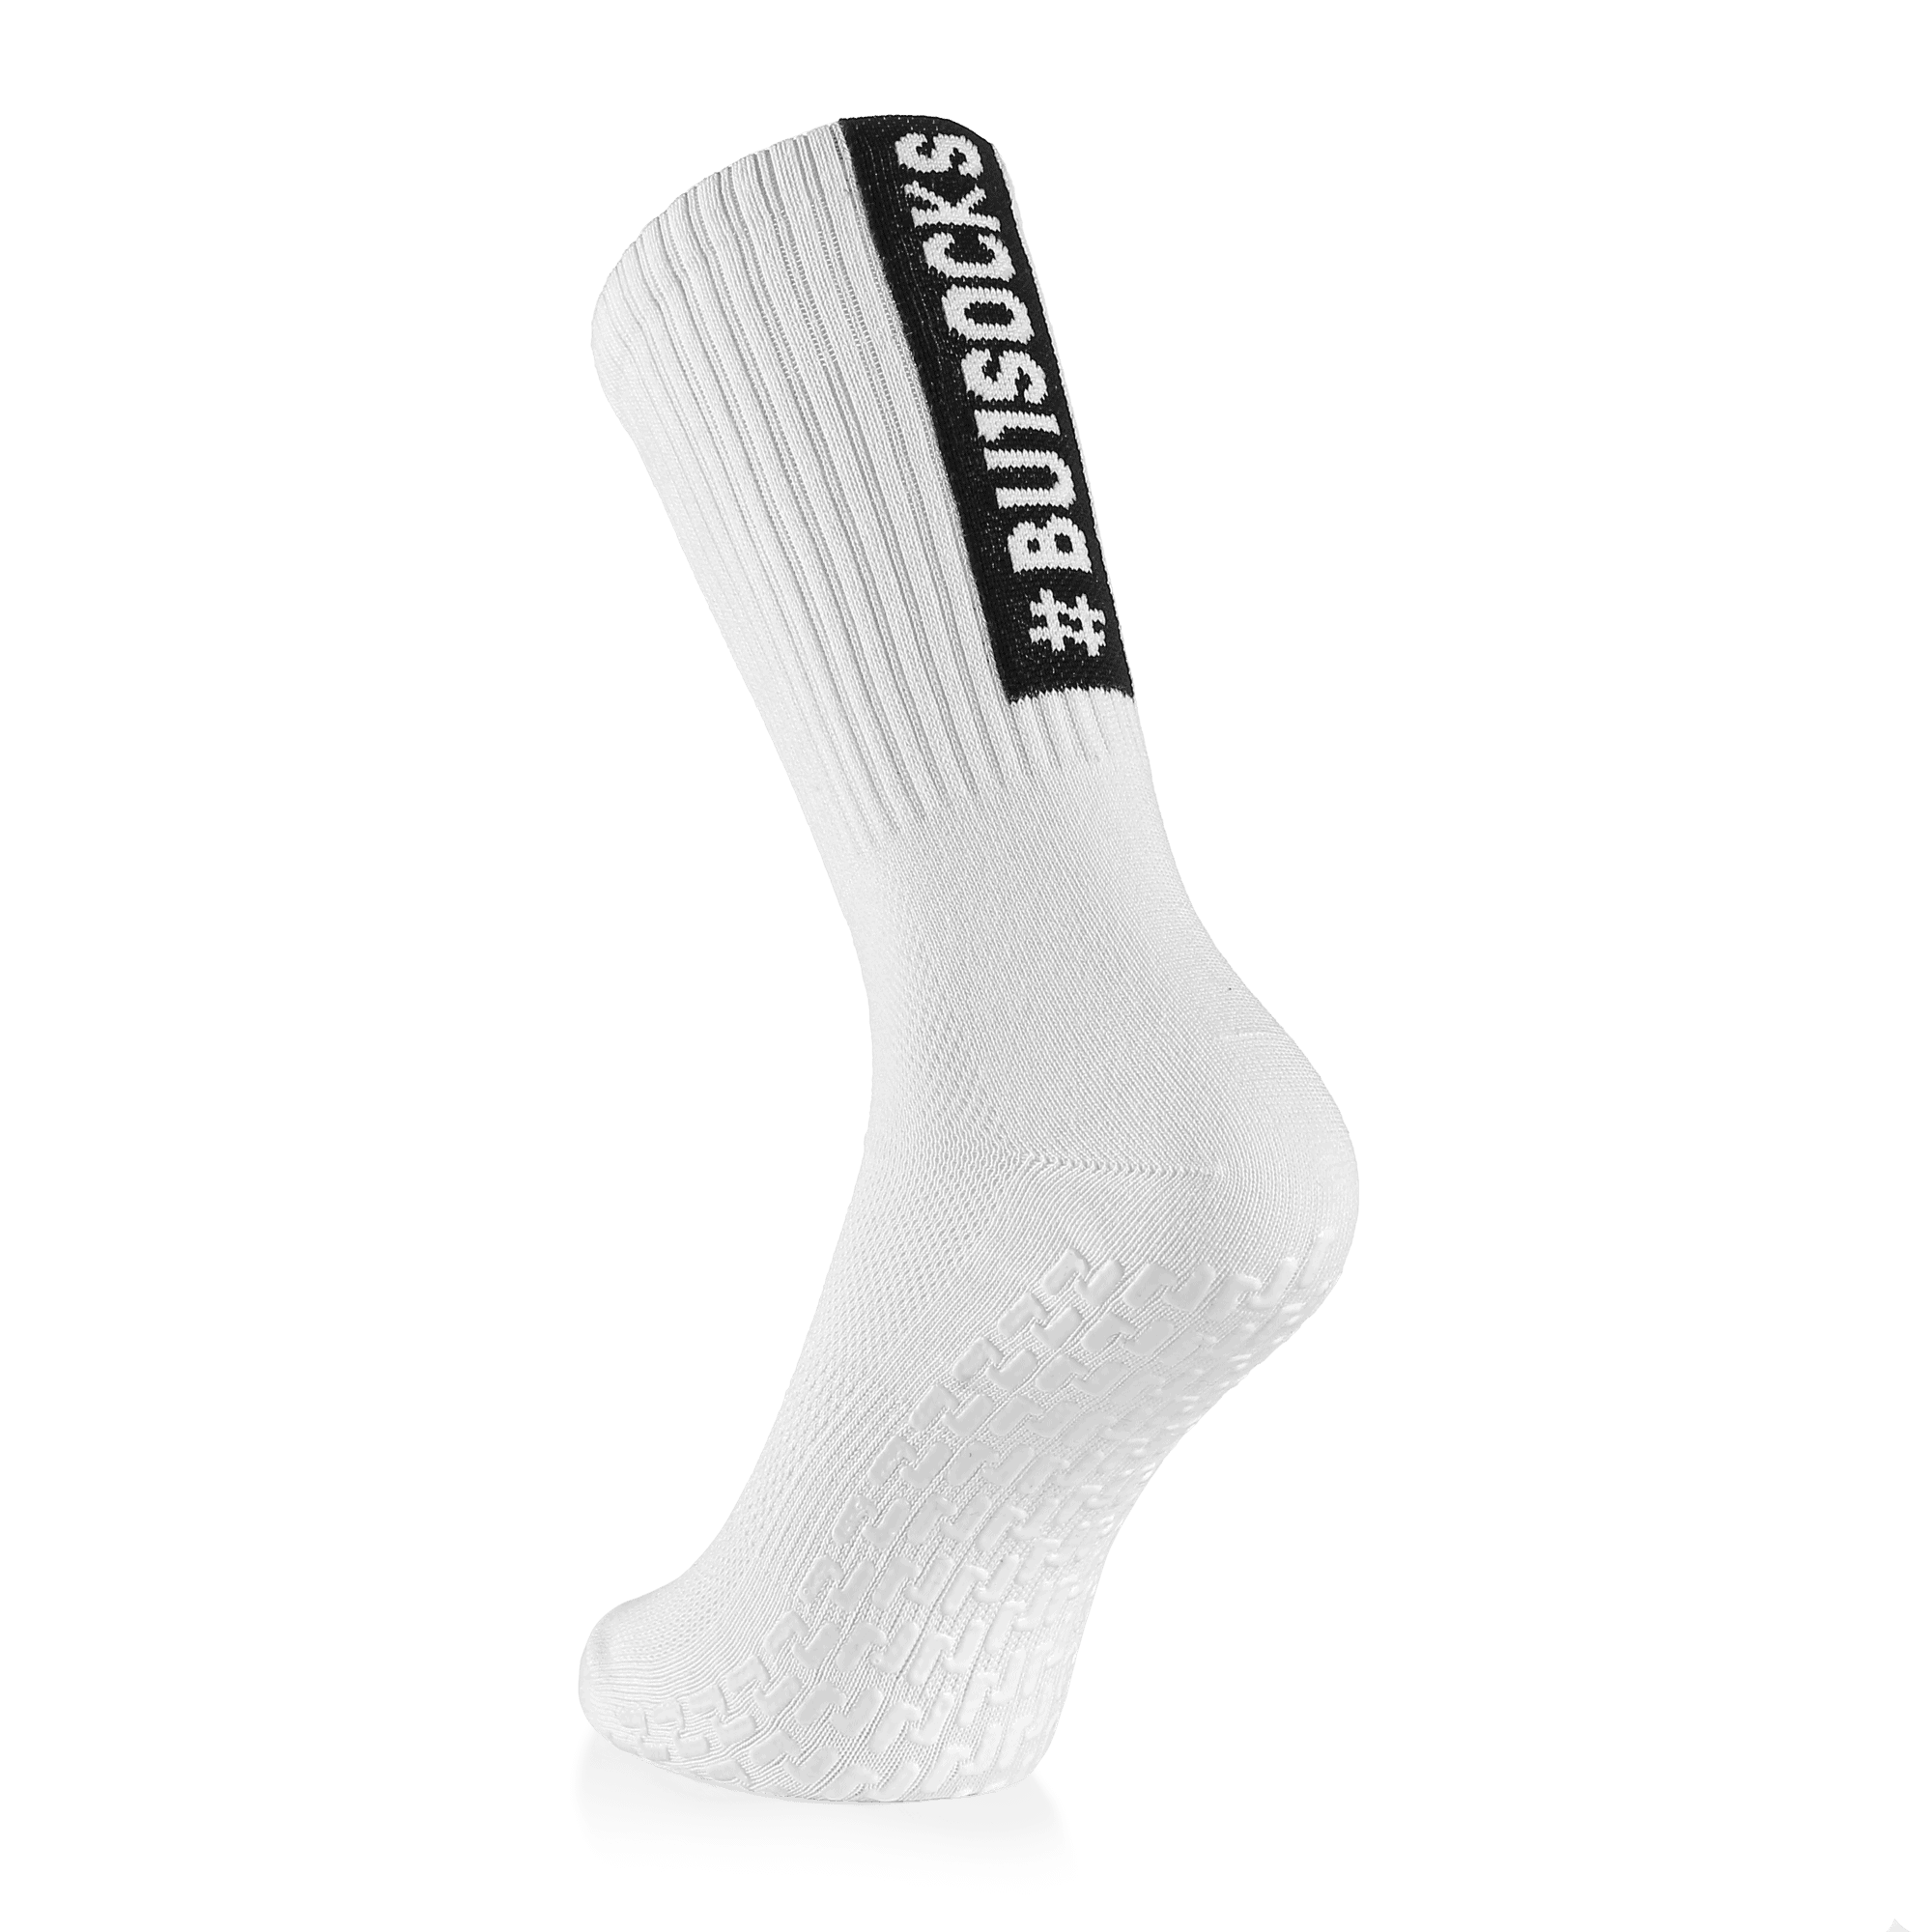 BU1 non-slip socks white - silicone